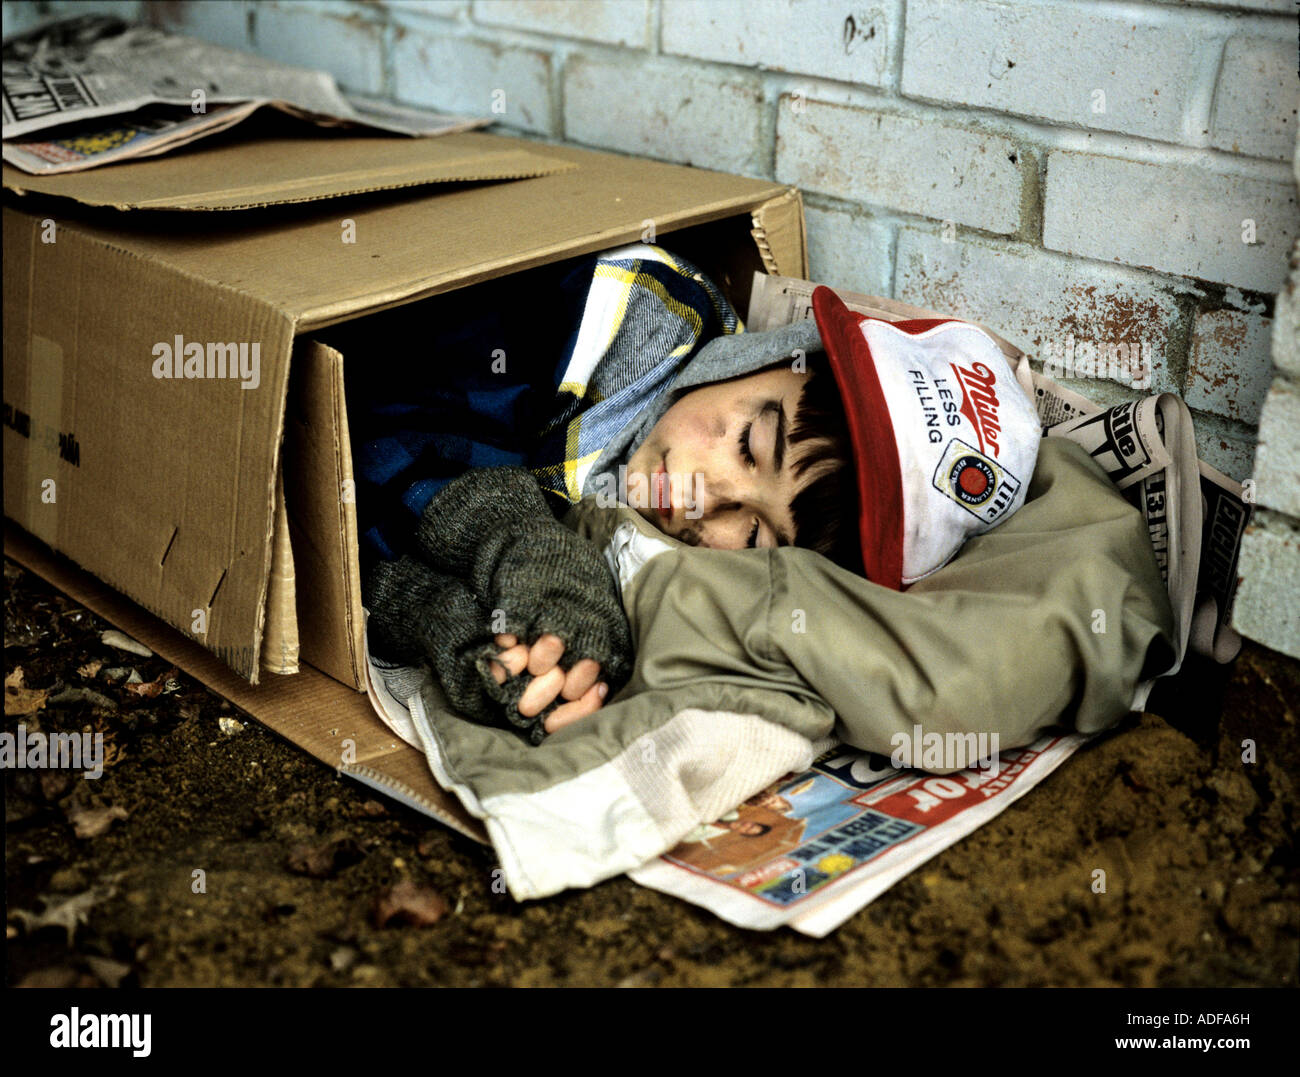 homeless-boy-sleeping-rough-in-street-ADFA6H.jpg